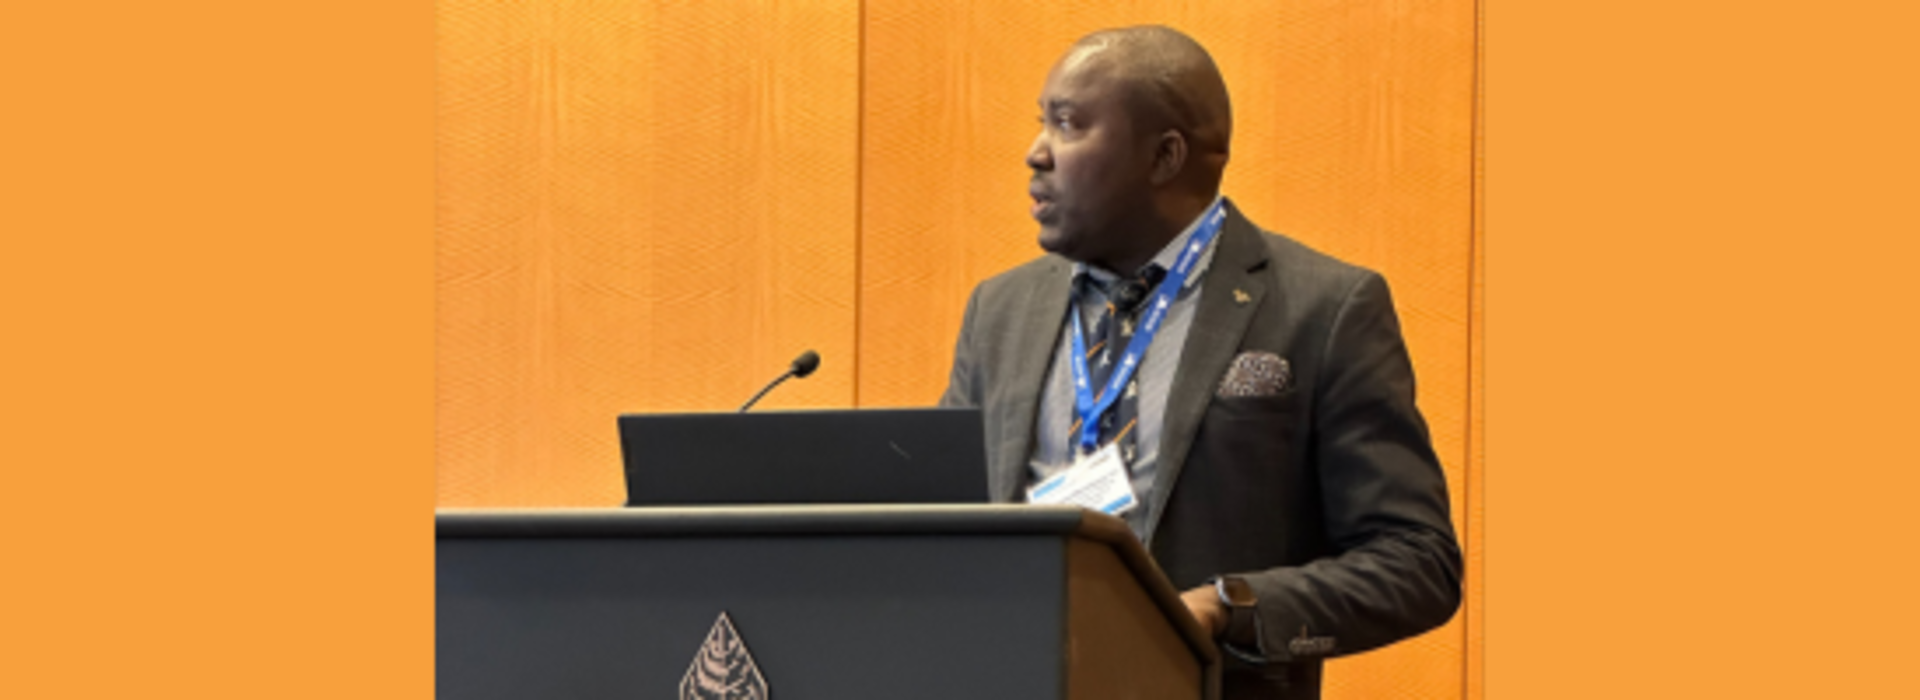 Dr. Christophe Mpirimbanyi presenting his findings